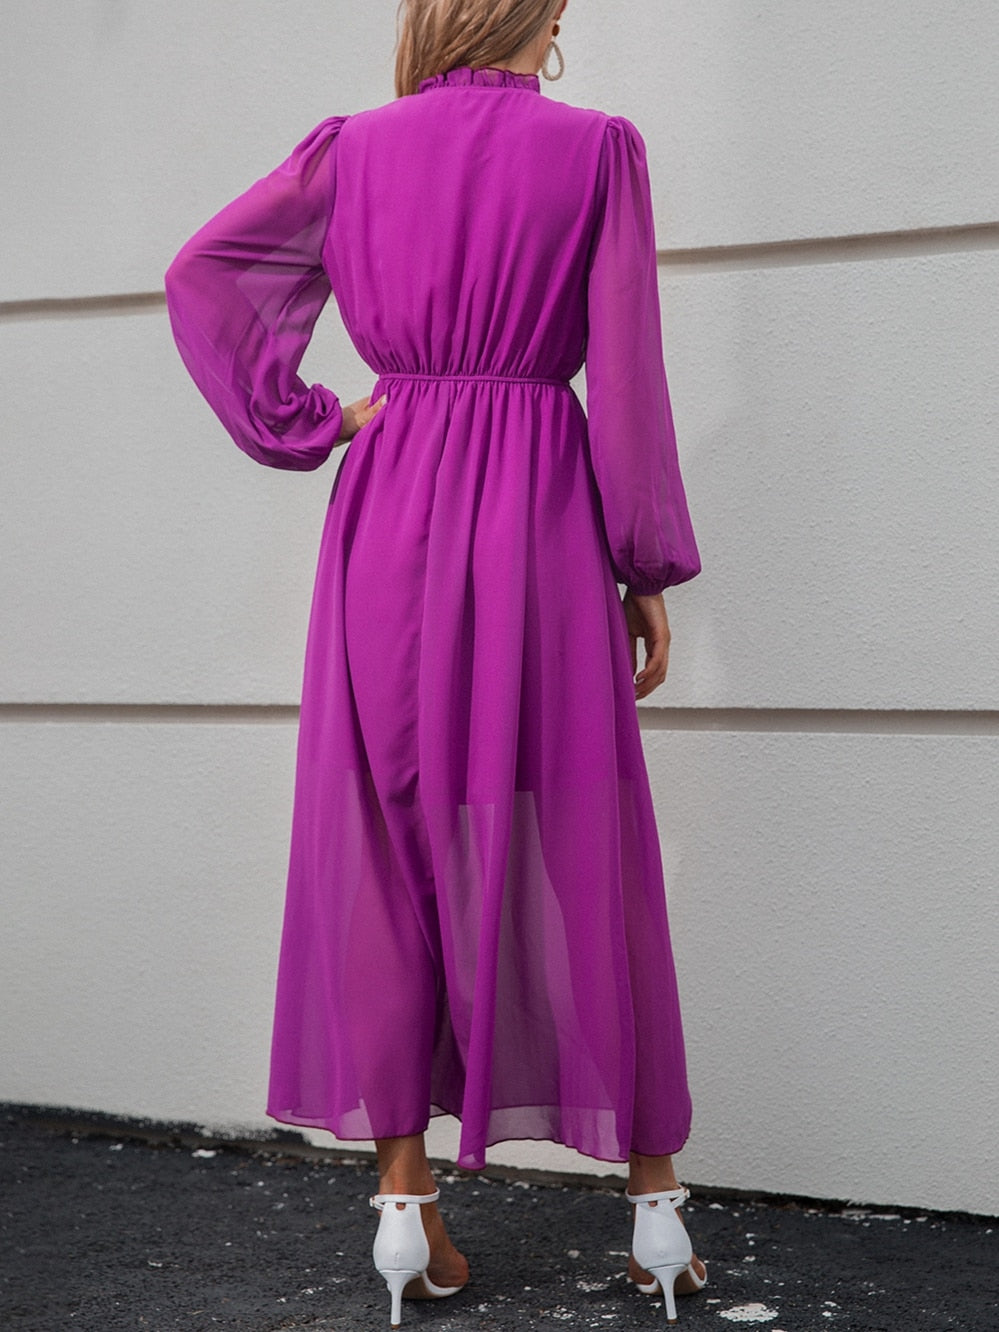 Amy Fashion - V Neck Solid Color Long Sleeve High Waist Purple Tie Dress